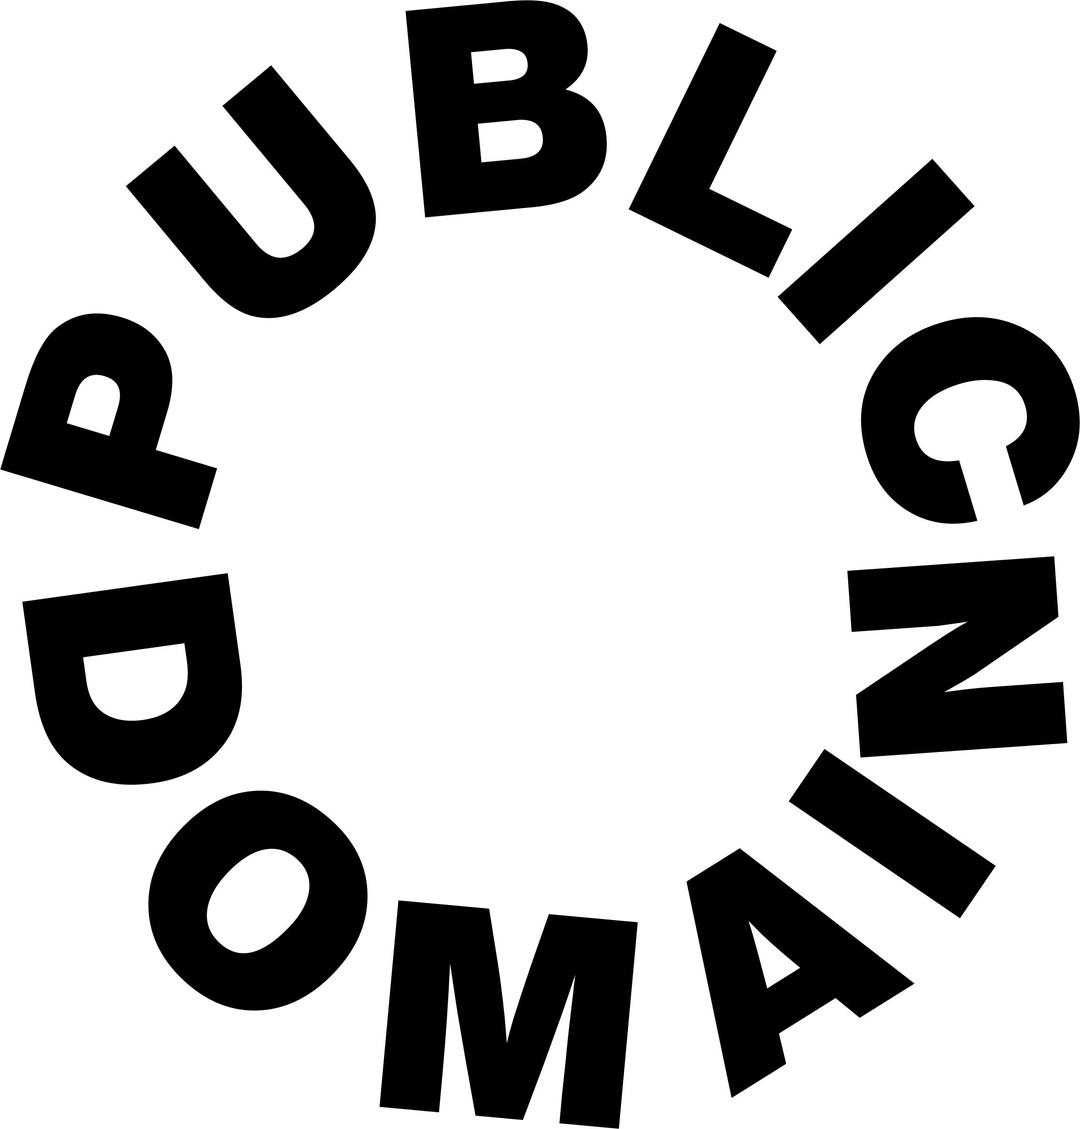 Public Domain Typography png transparent